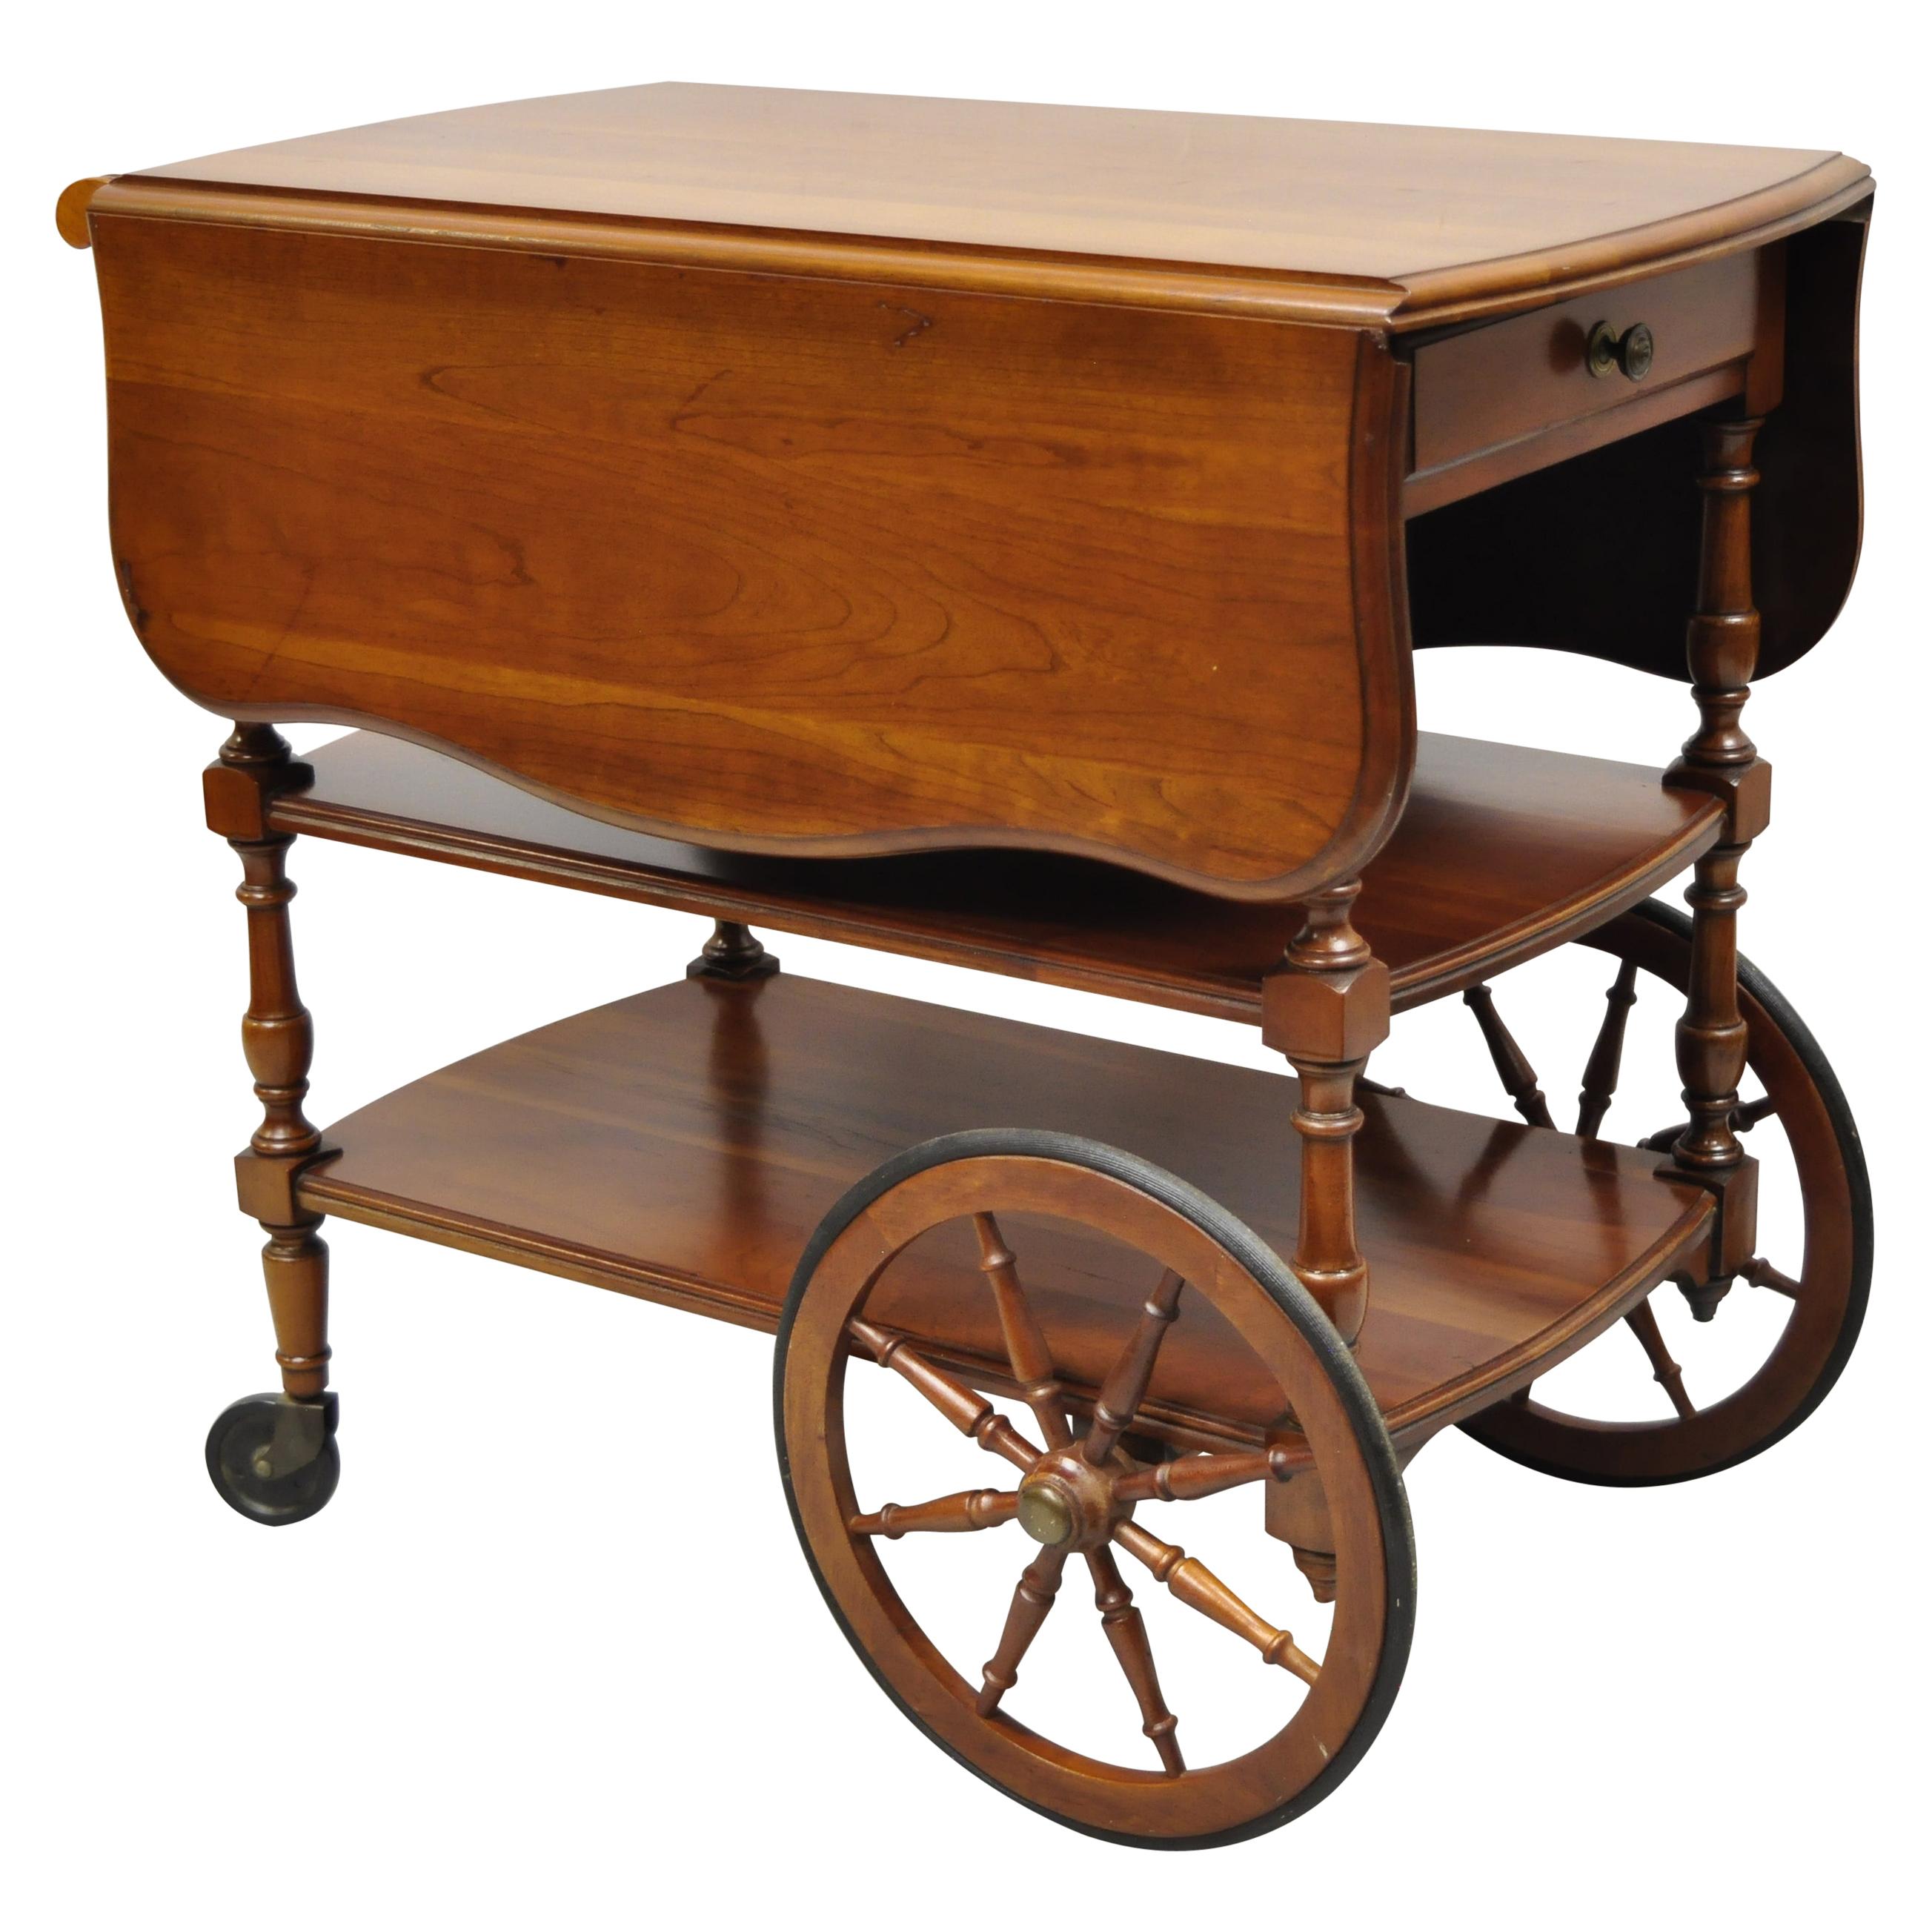 Pennsylvania House Cherry Wood Drop, Wooden Tea Carts With Wheels